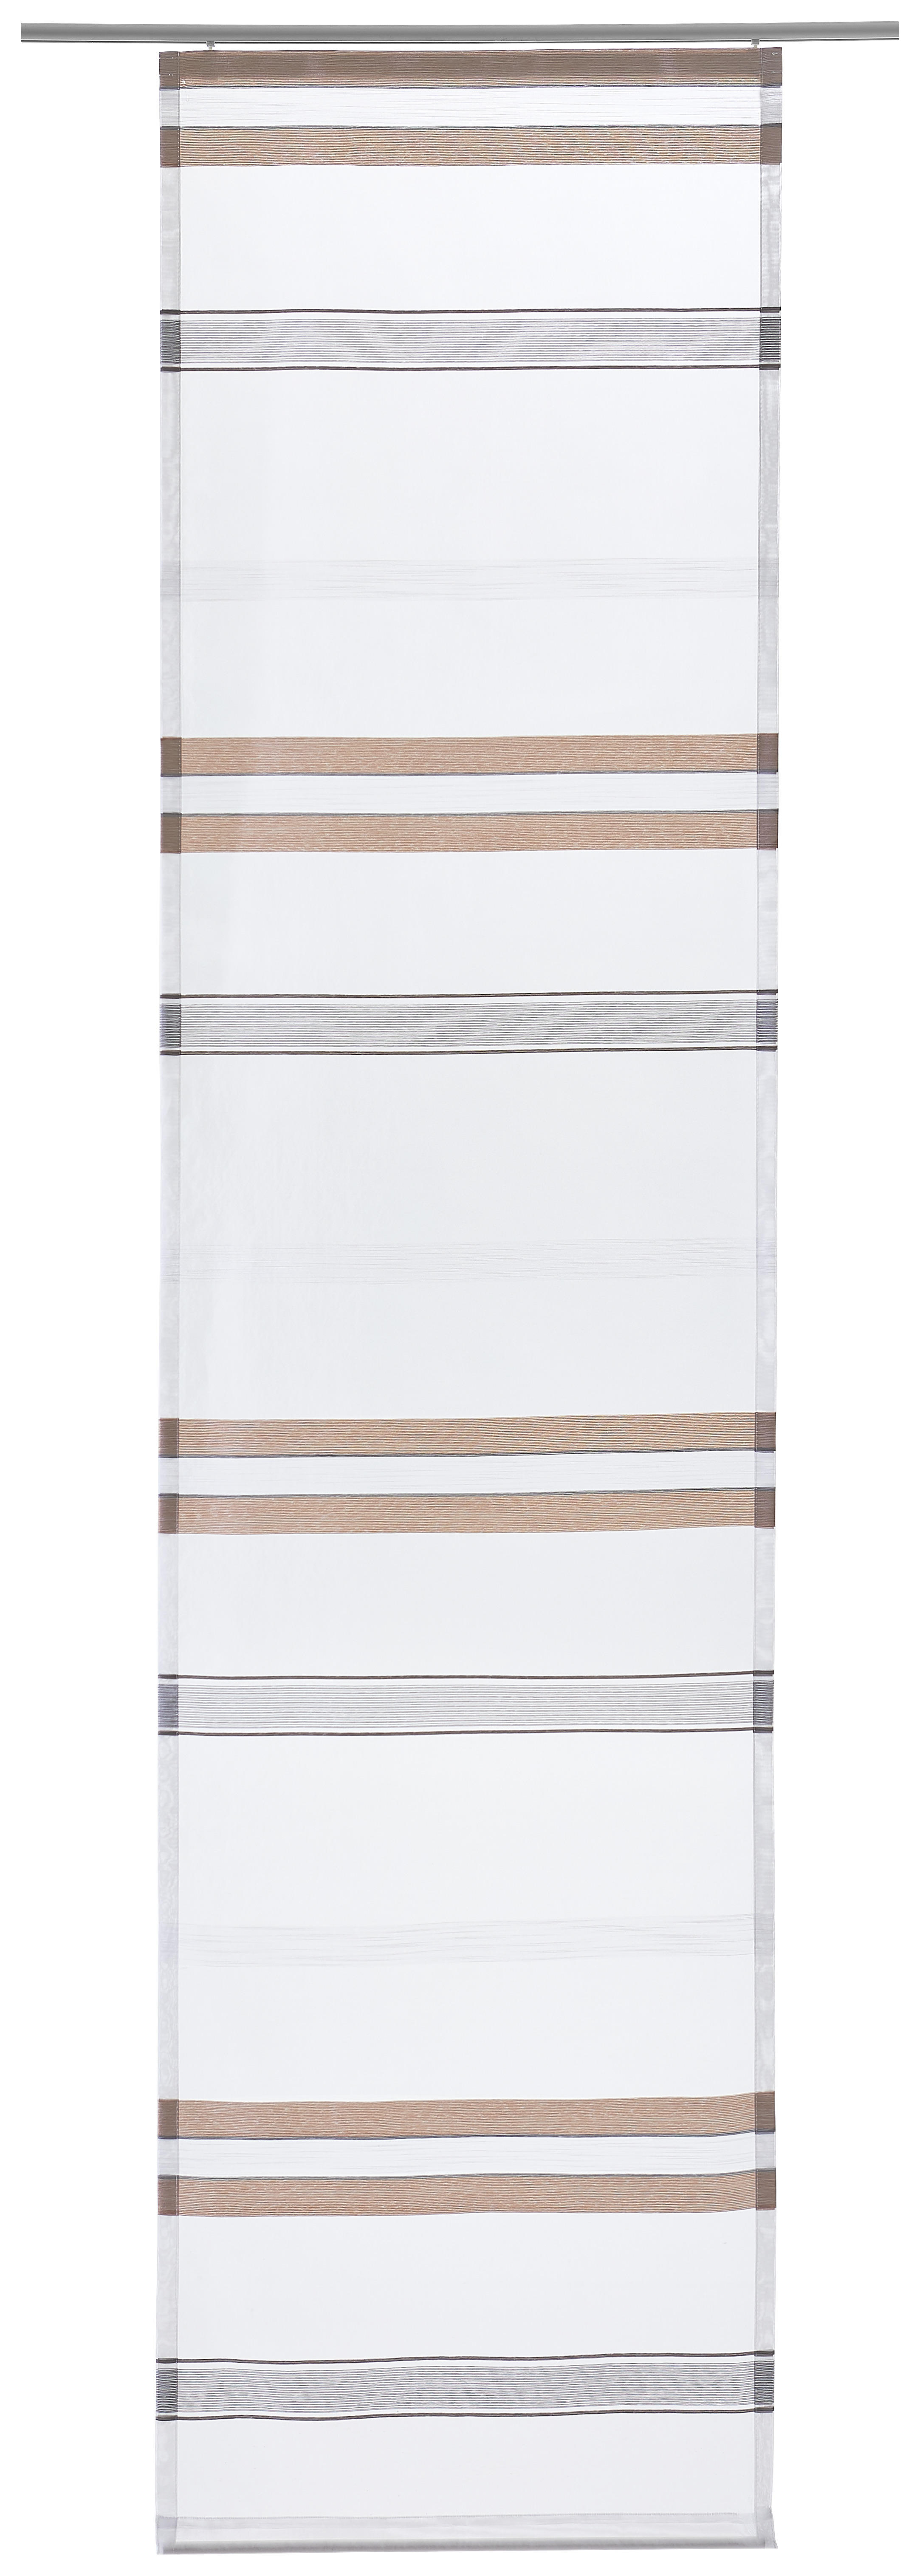 FLÄCHENVORHANG   transparent   60/245 cm  - Terracotta/Weiß, Basics, Textil (60/245cm) - Esposa